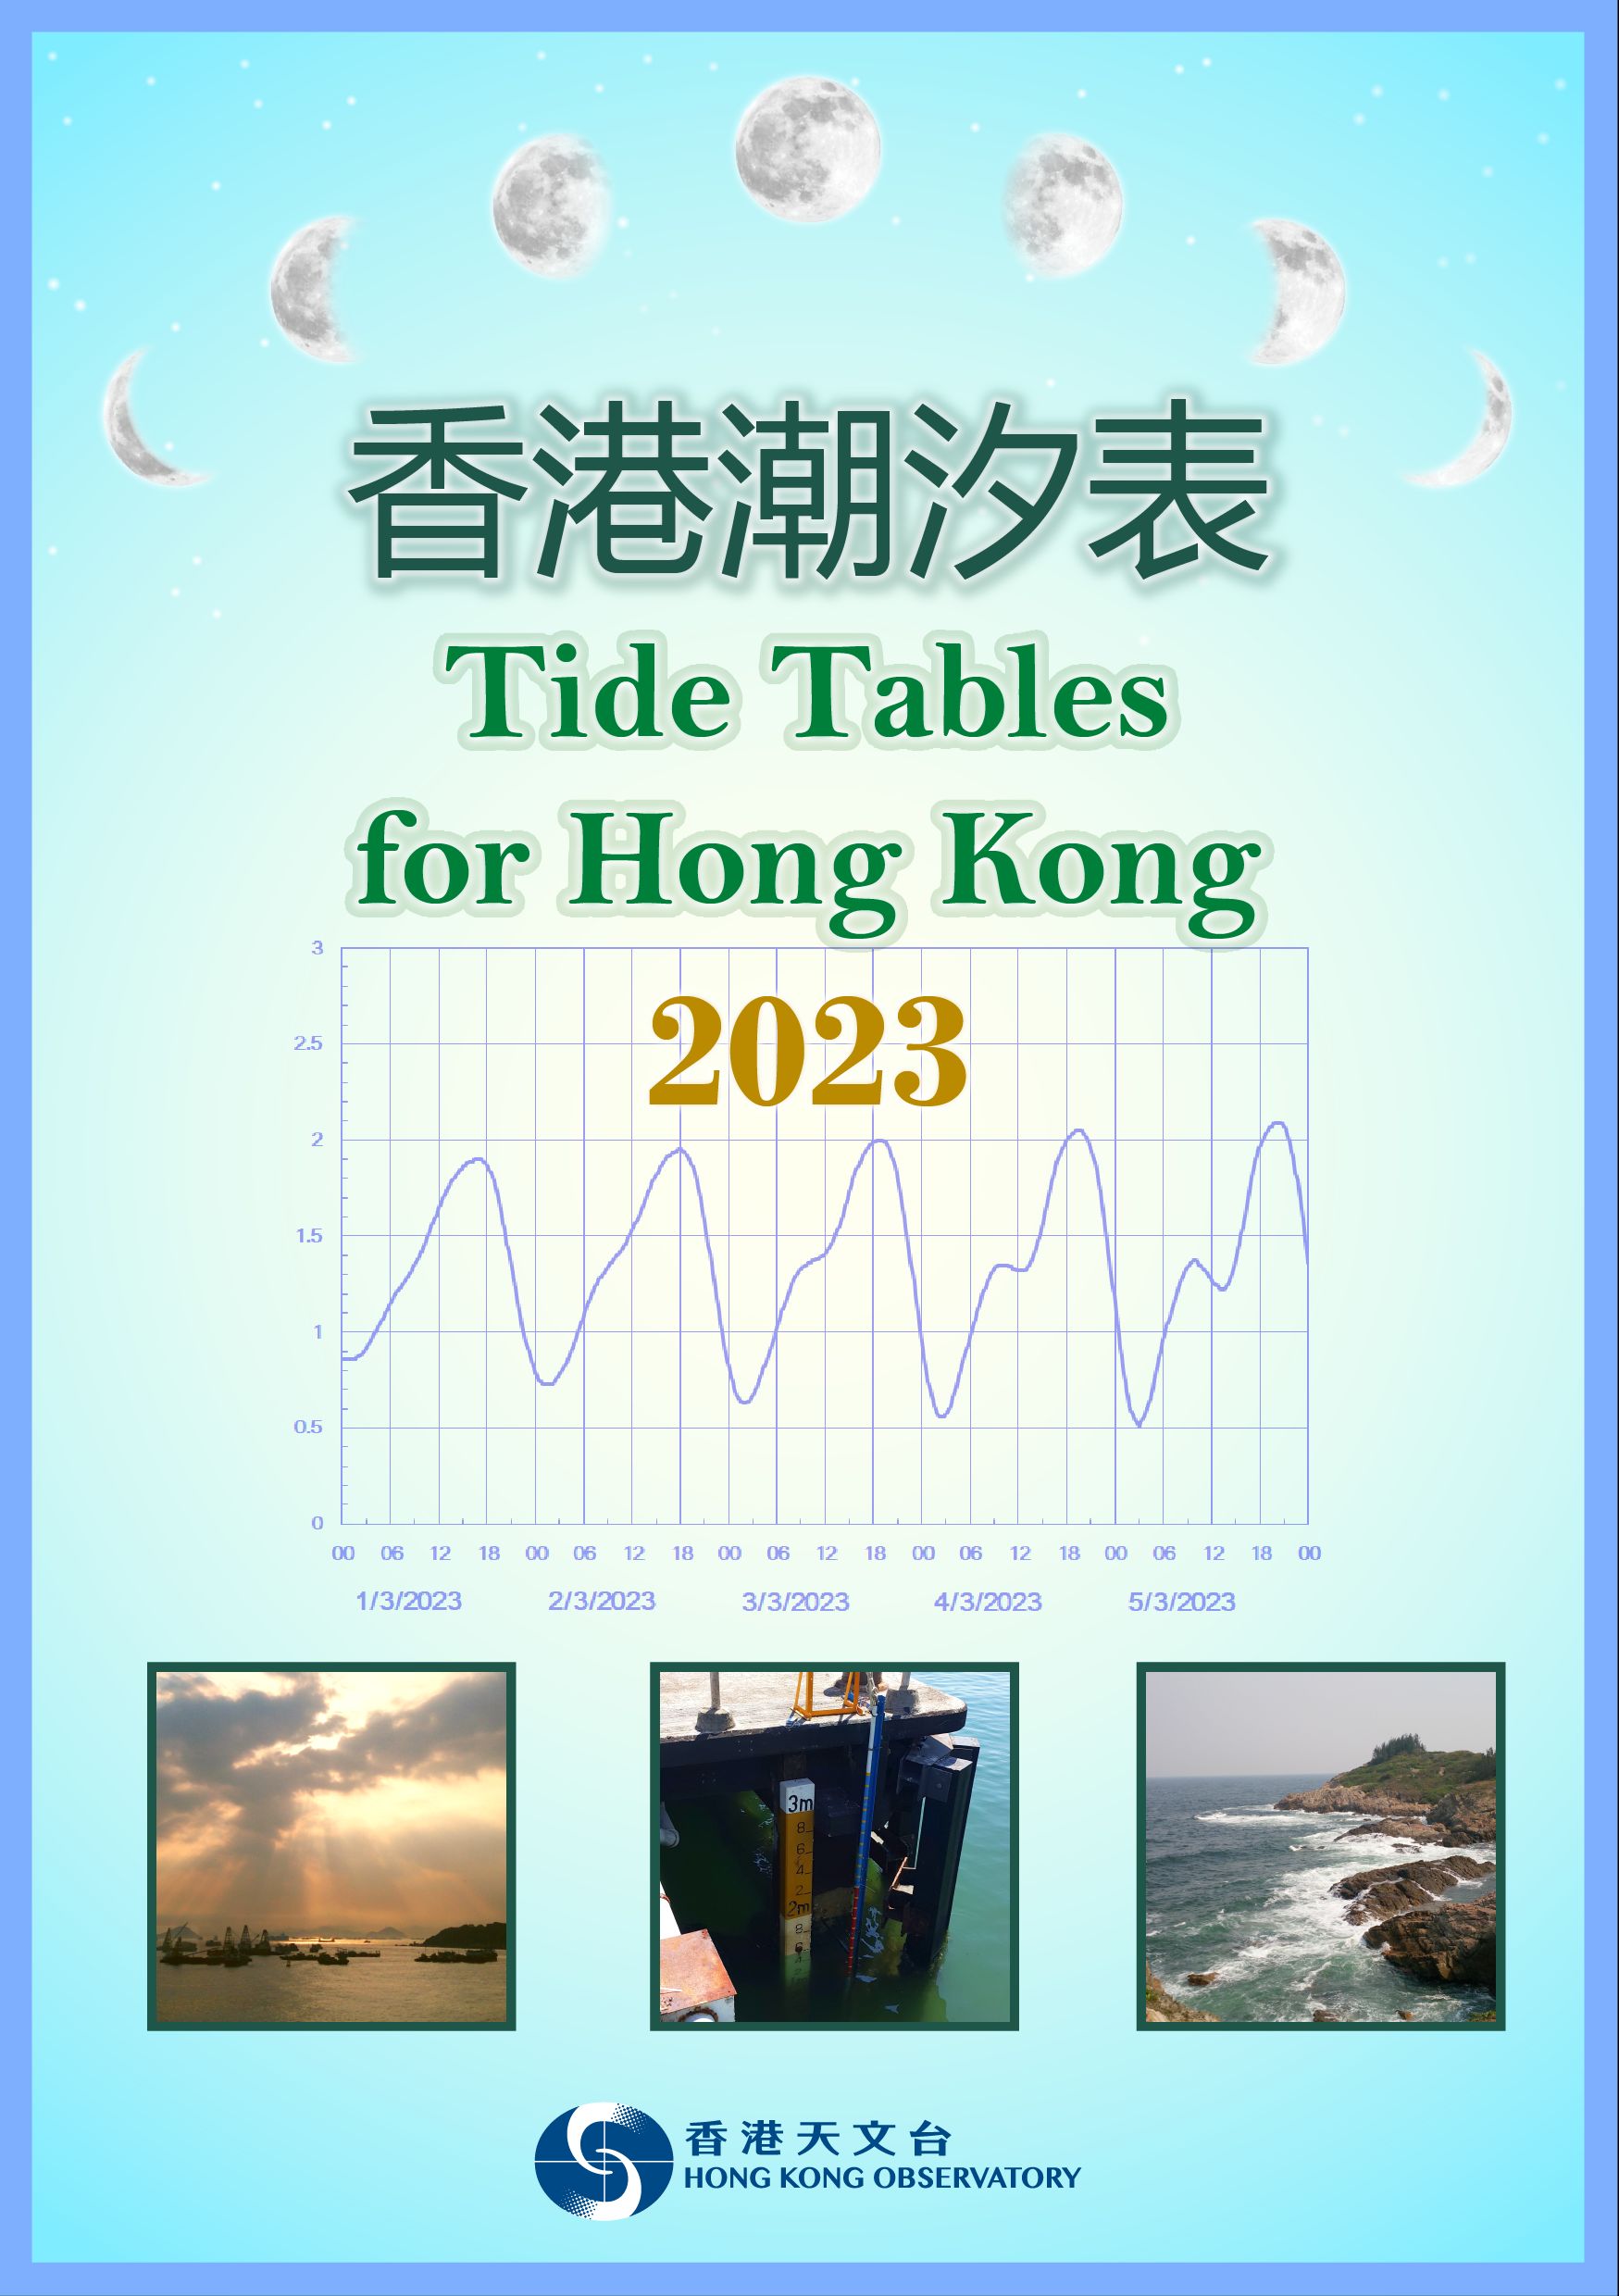 Tide tables for Hong Kong